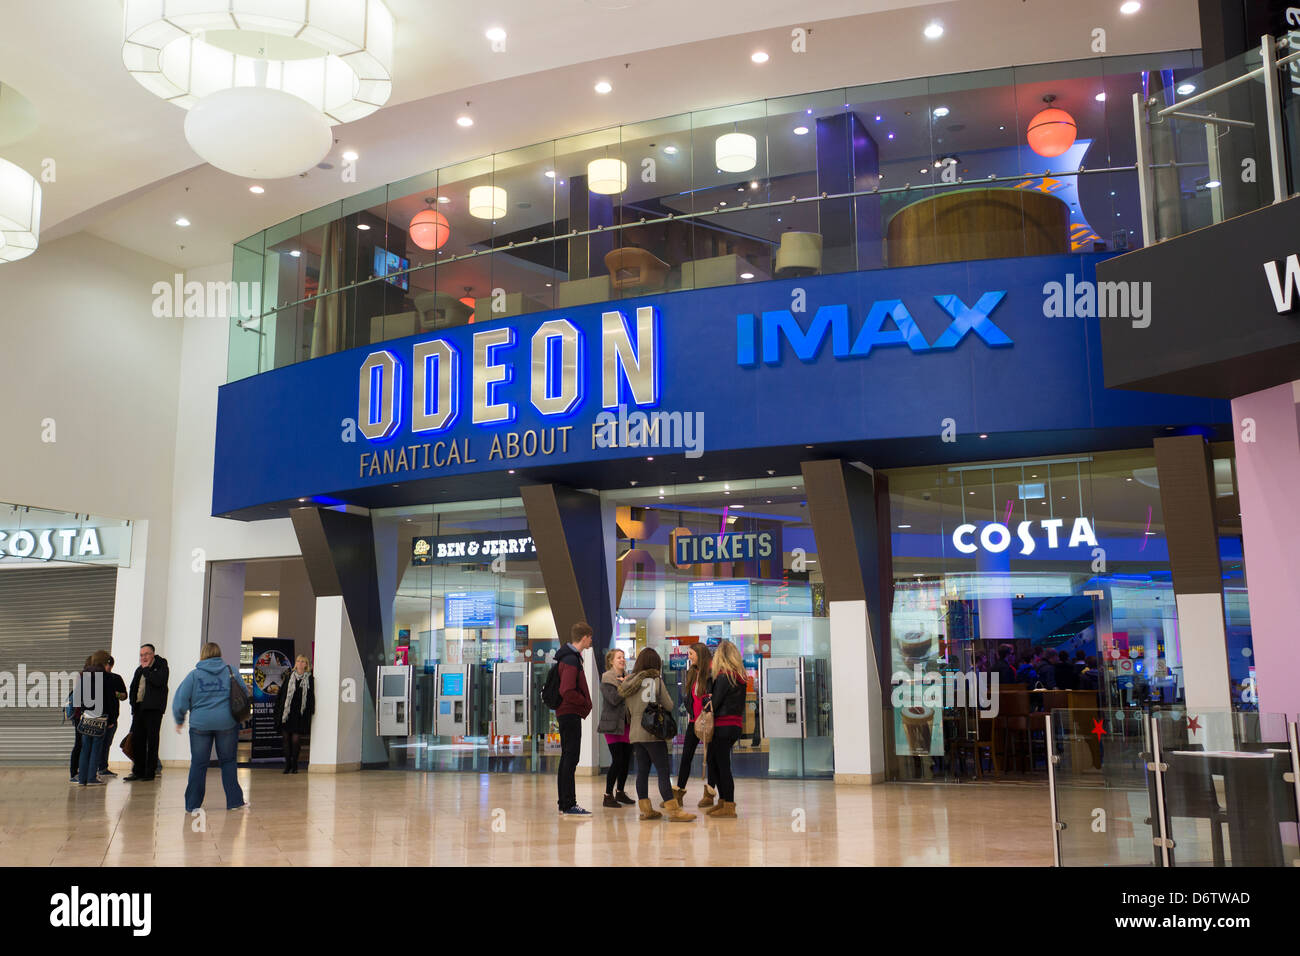 Odeon Imax cinema at the Metrocentre. Stock Photo